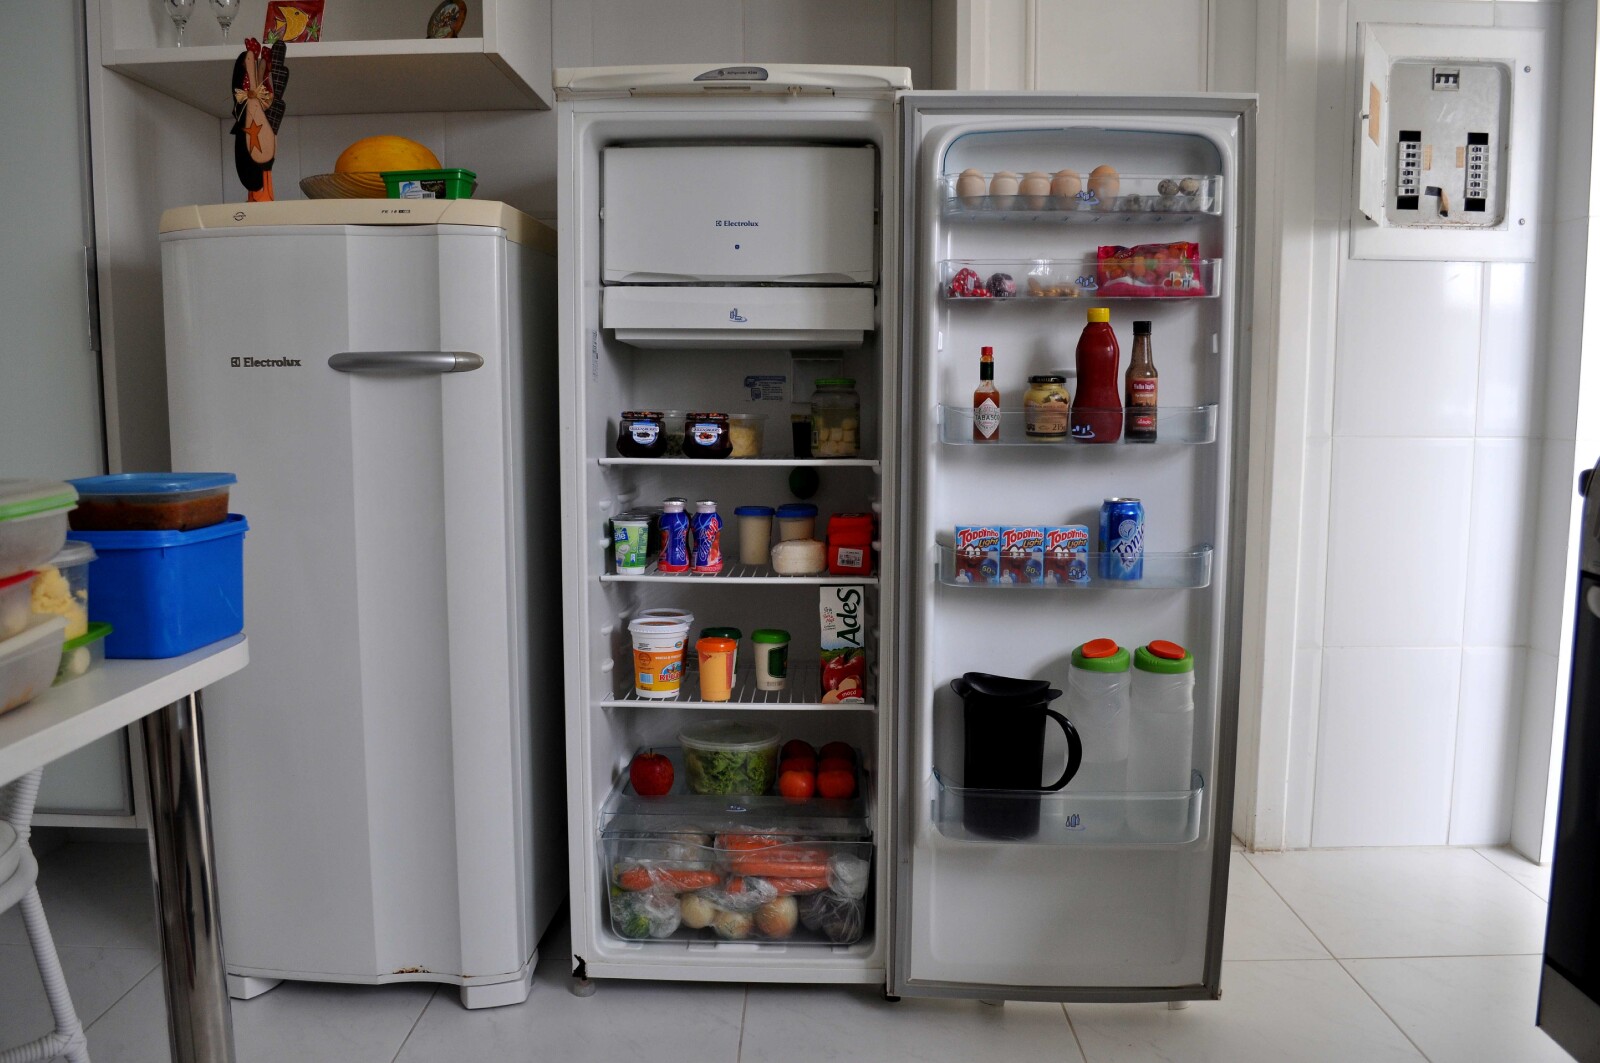 Defective LG Refrigerator Ice Makers Spark Nationwide Lawsuit